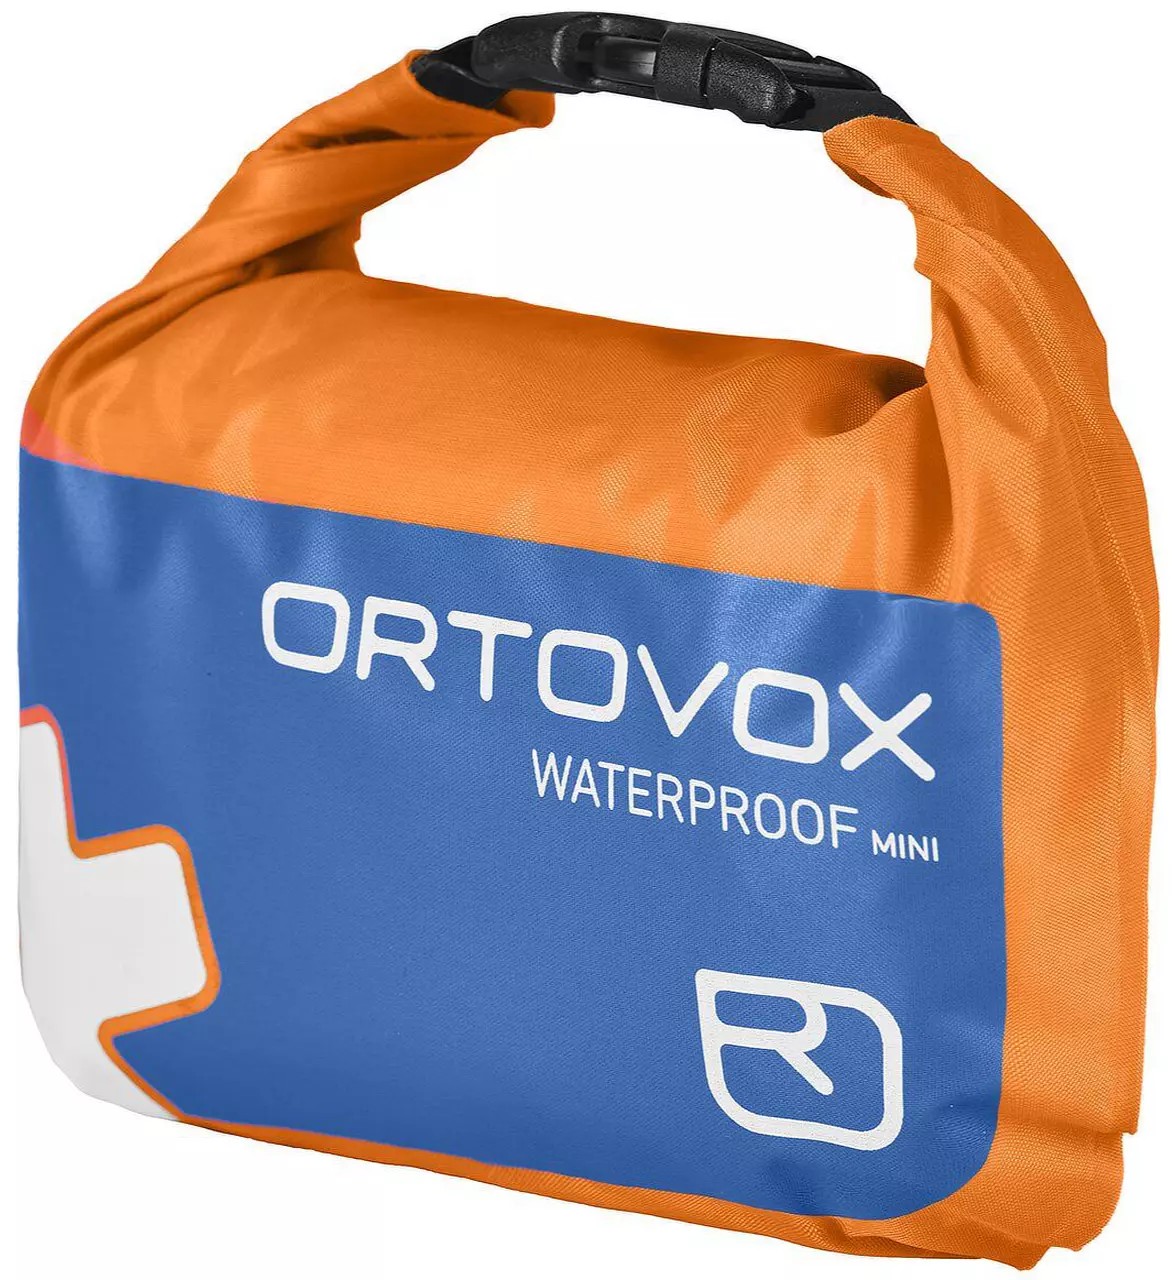 First Aid Waterproof Mini von Ortovox